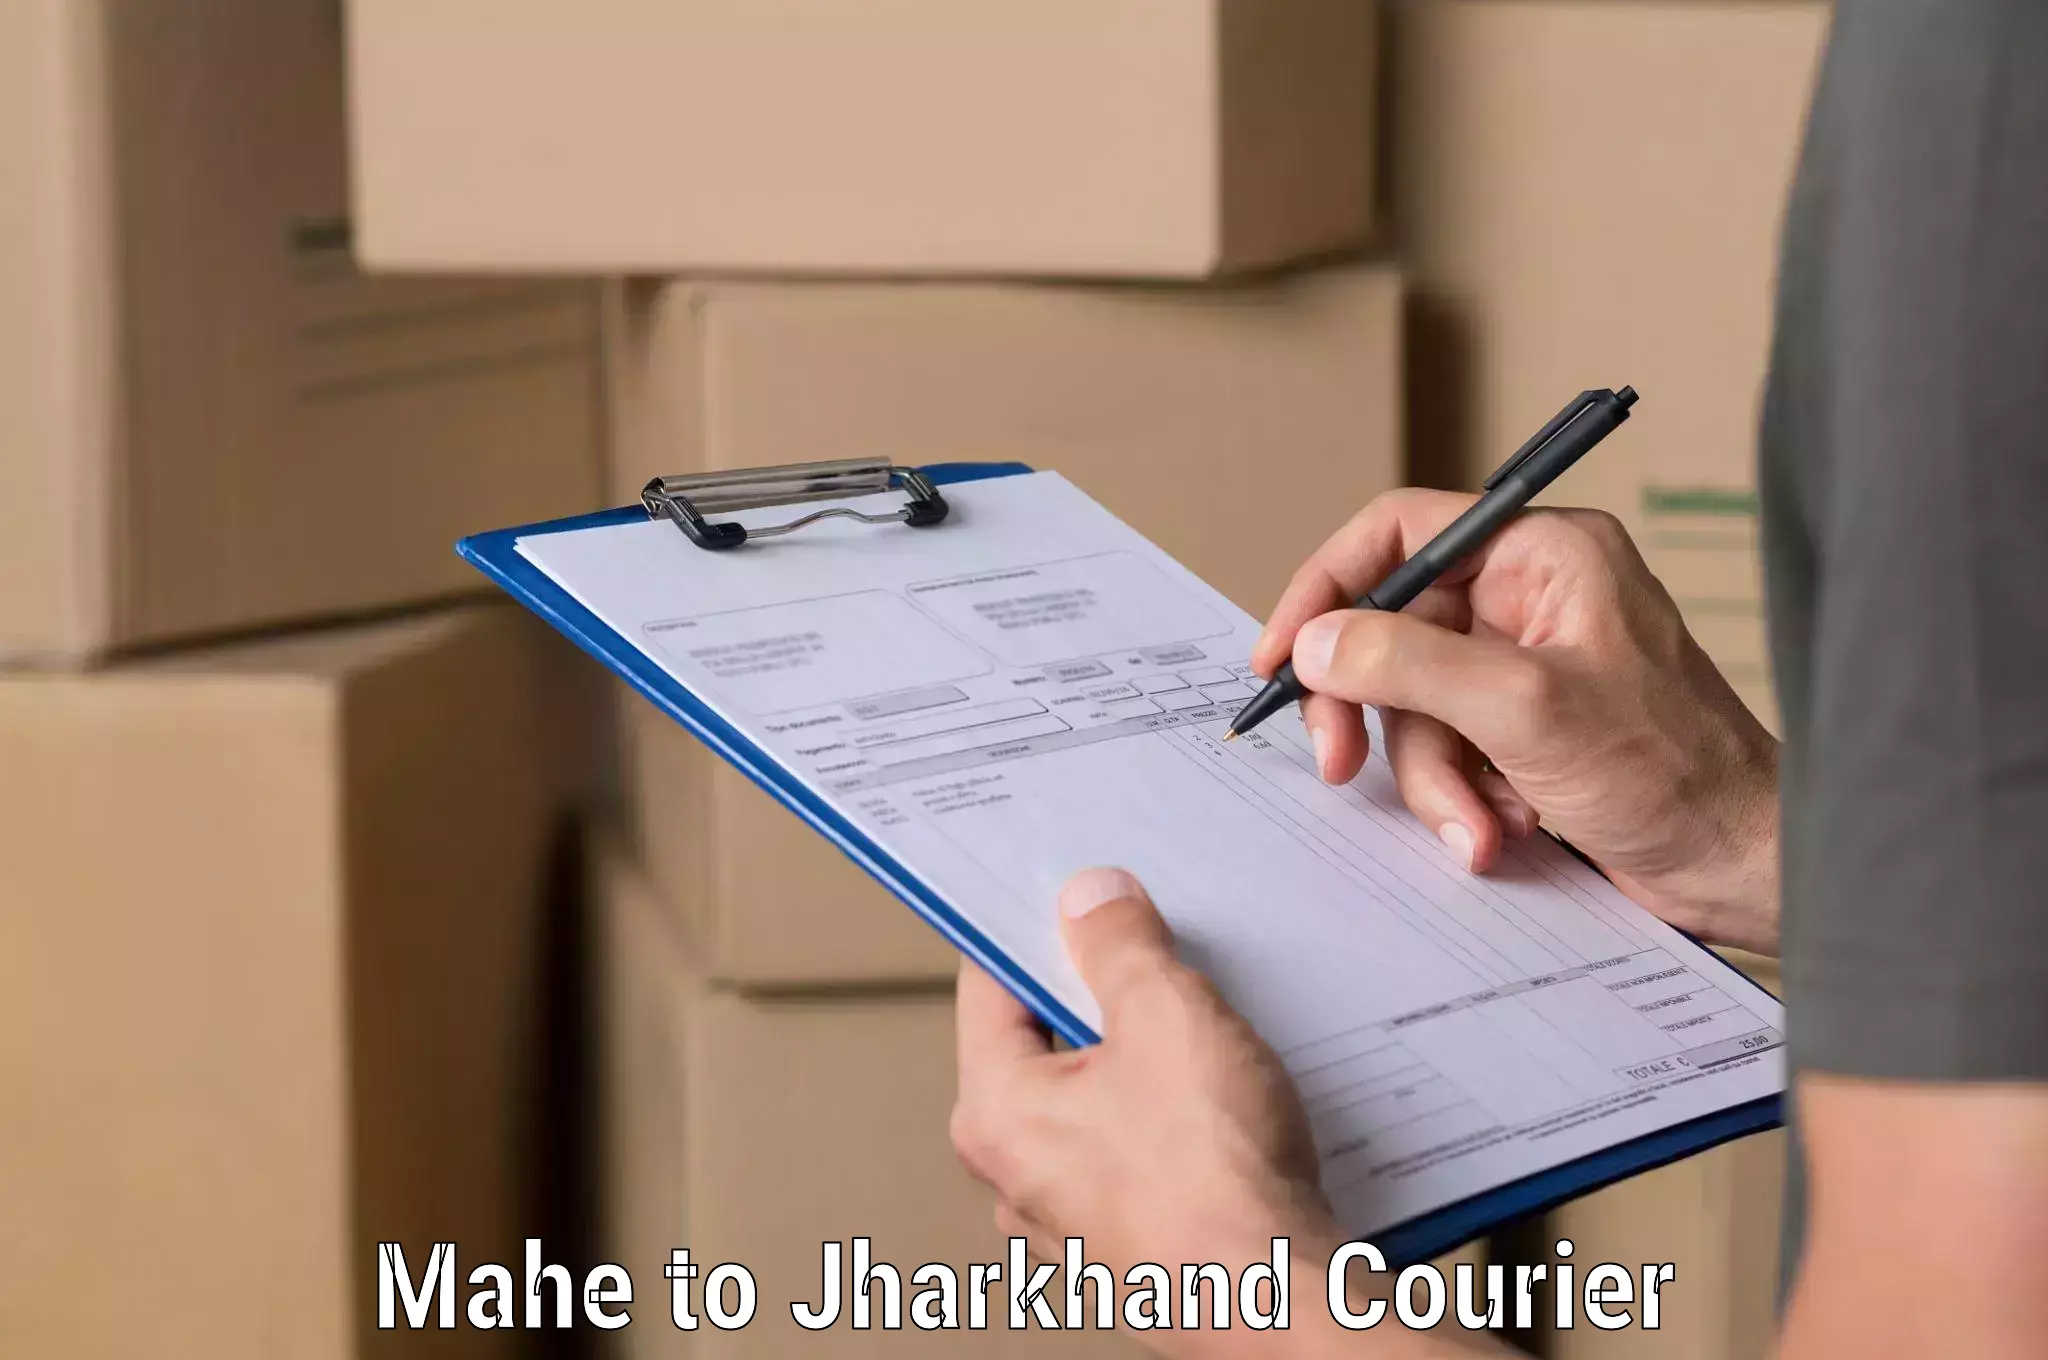 Bulk shipping discounts Mahe to Rangalia